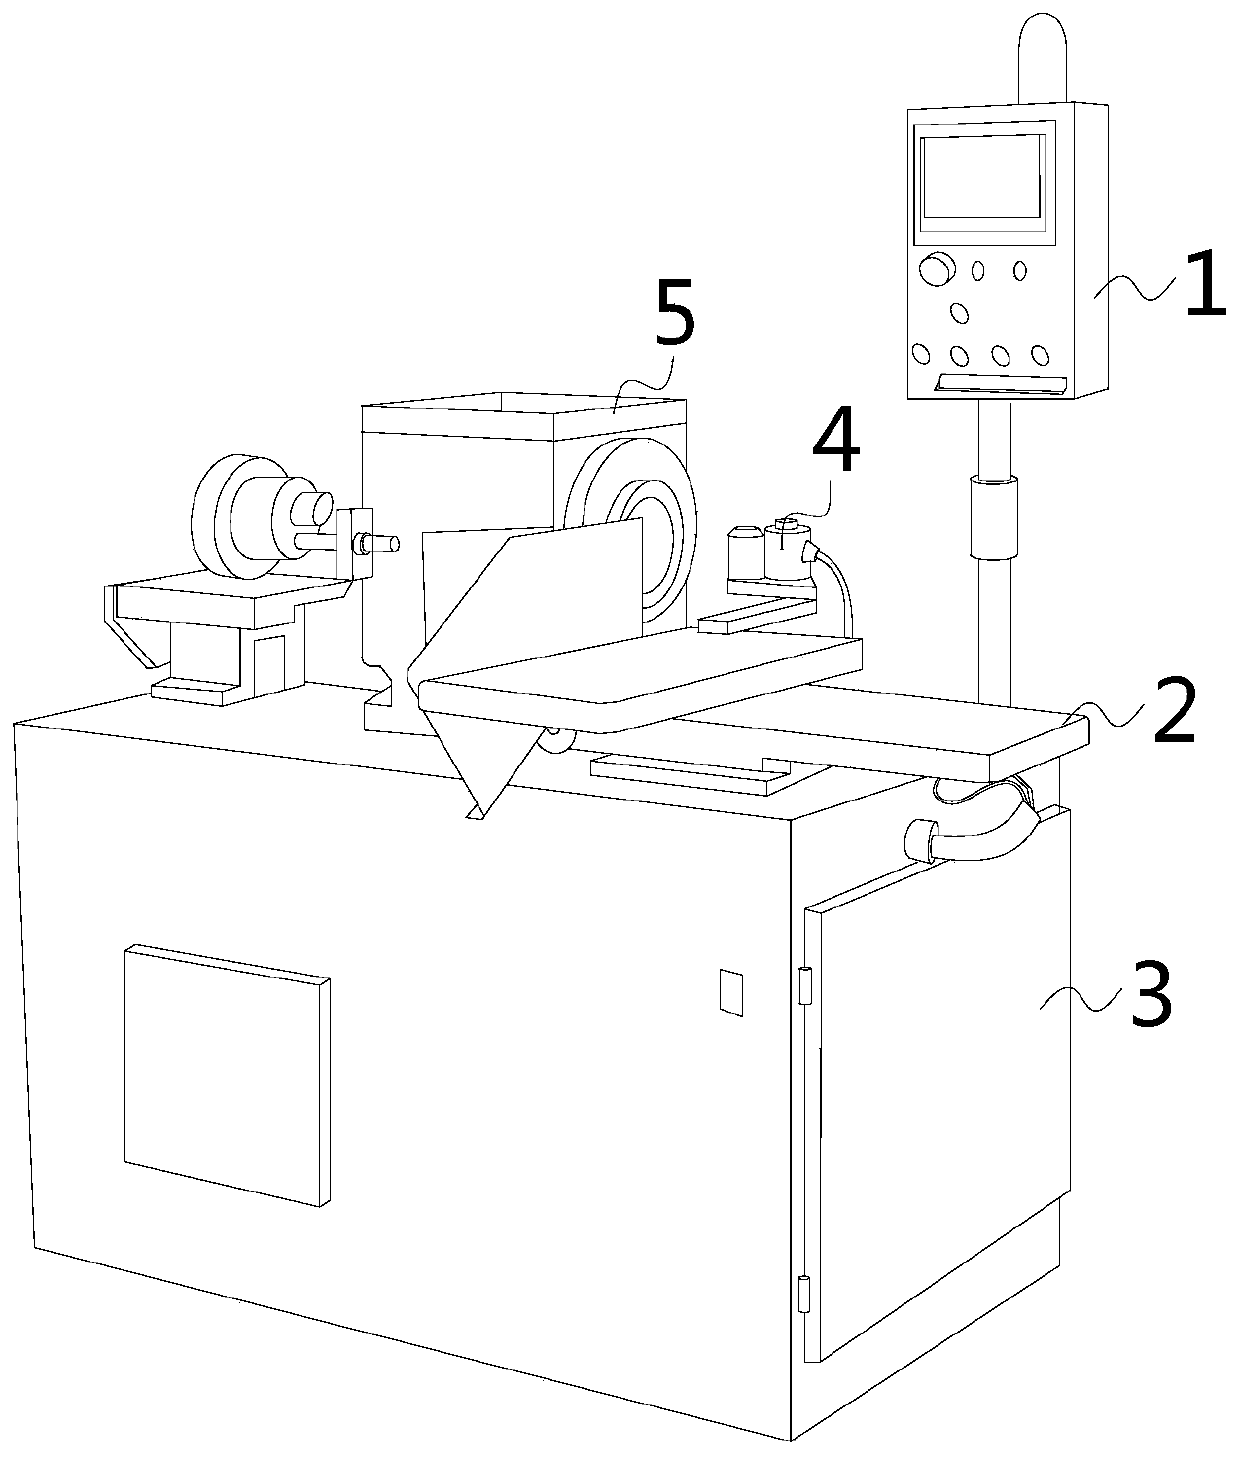 Bearing ring automatic machining equipment